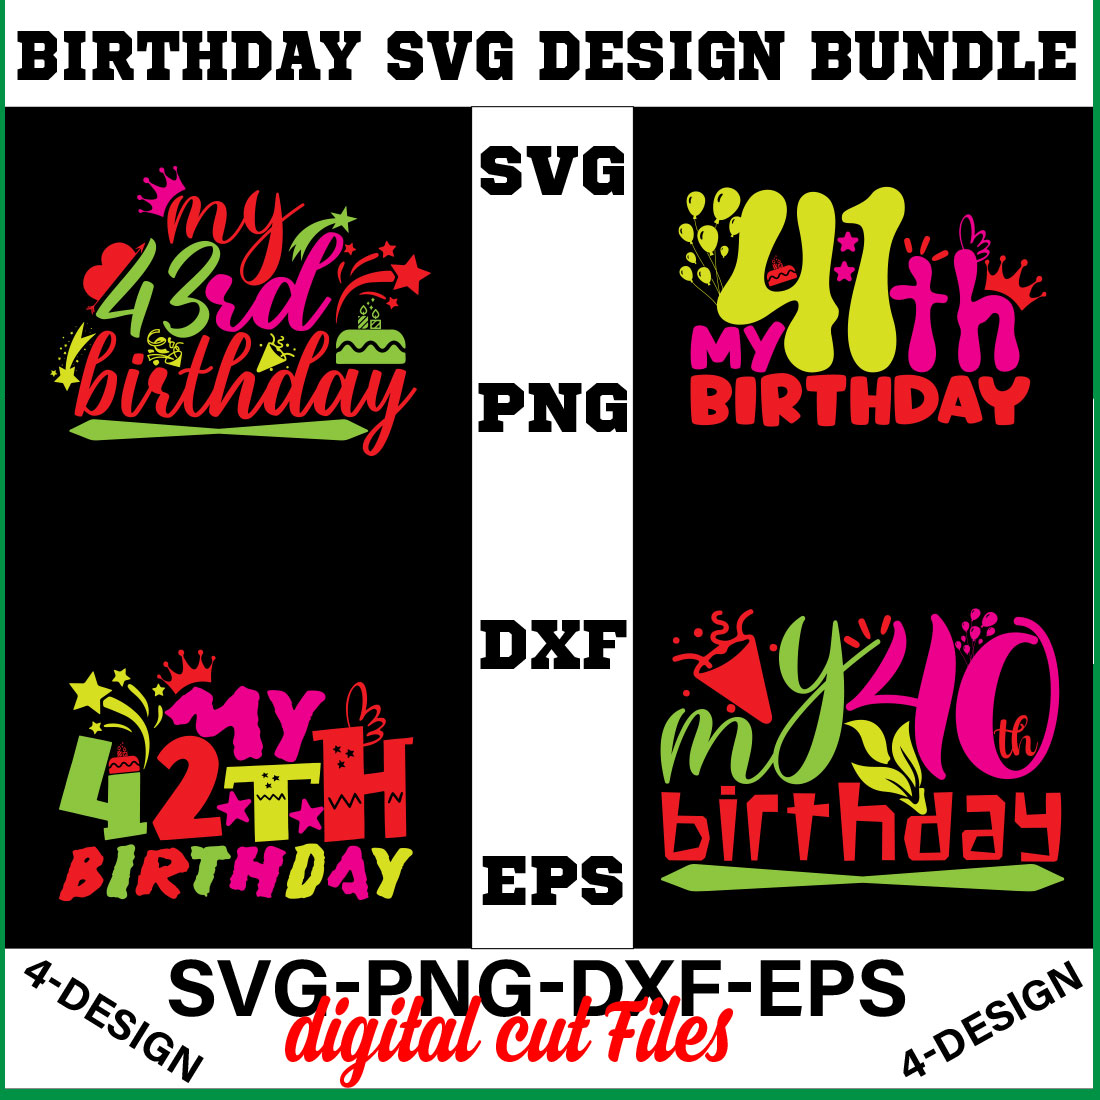 birthday svg design bundle Happy birthday svg bundle hand lettered birthday svg birthday party svg Volume-11 cover image.